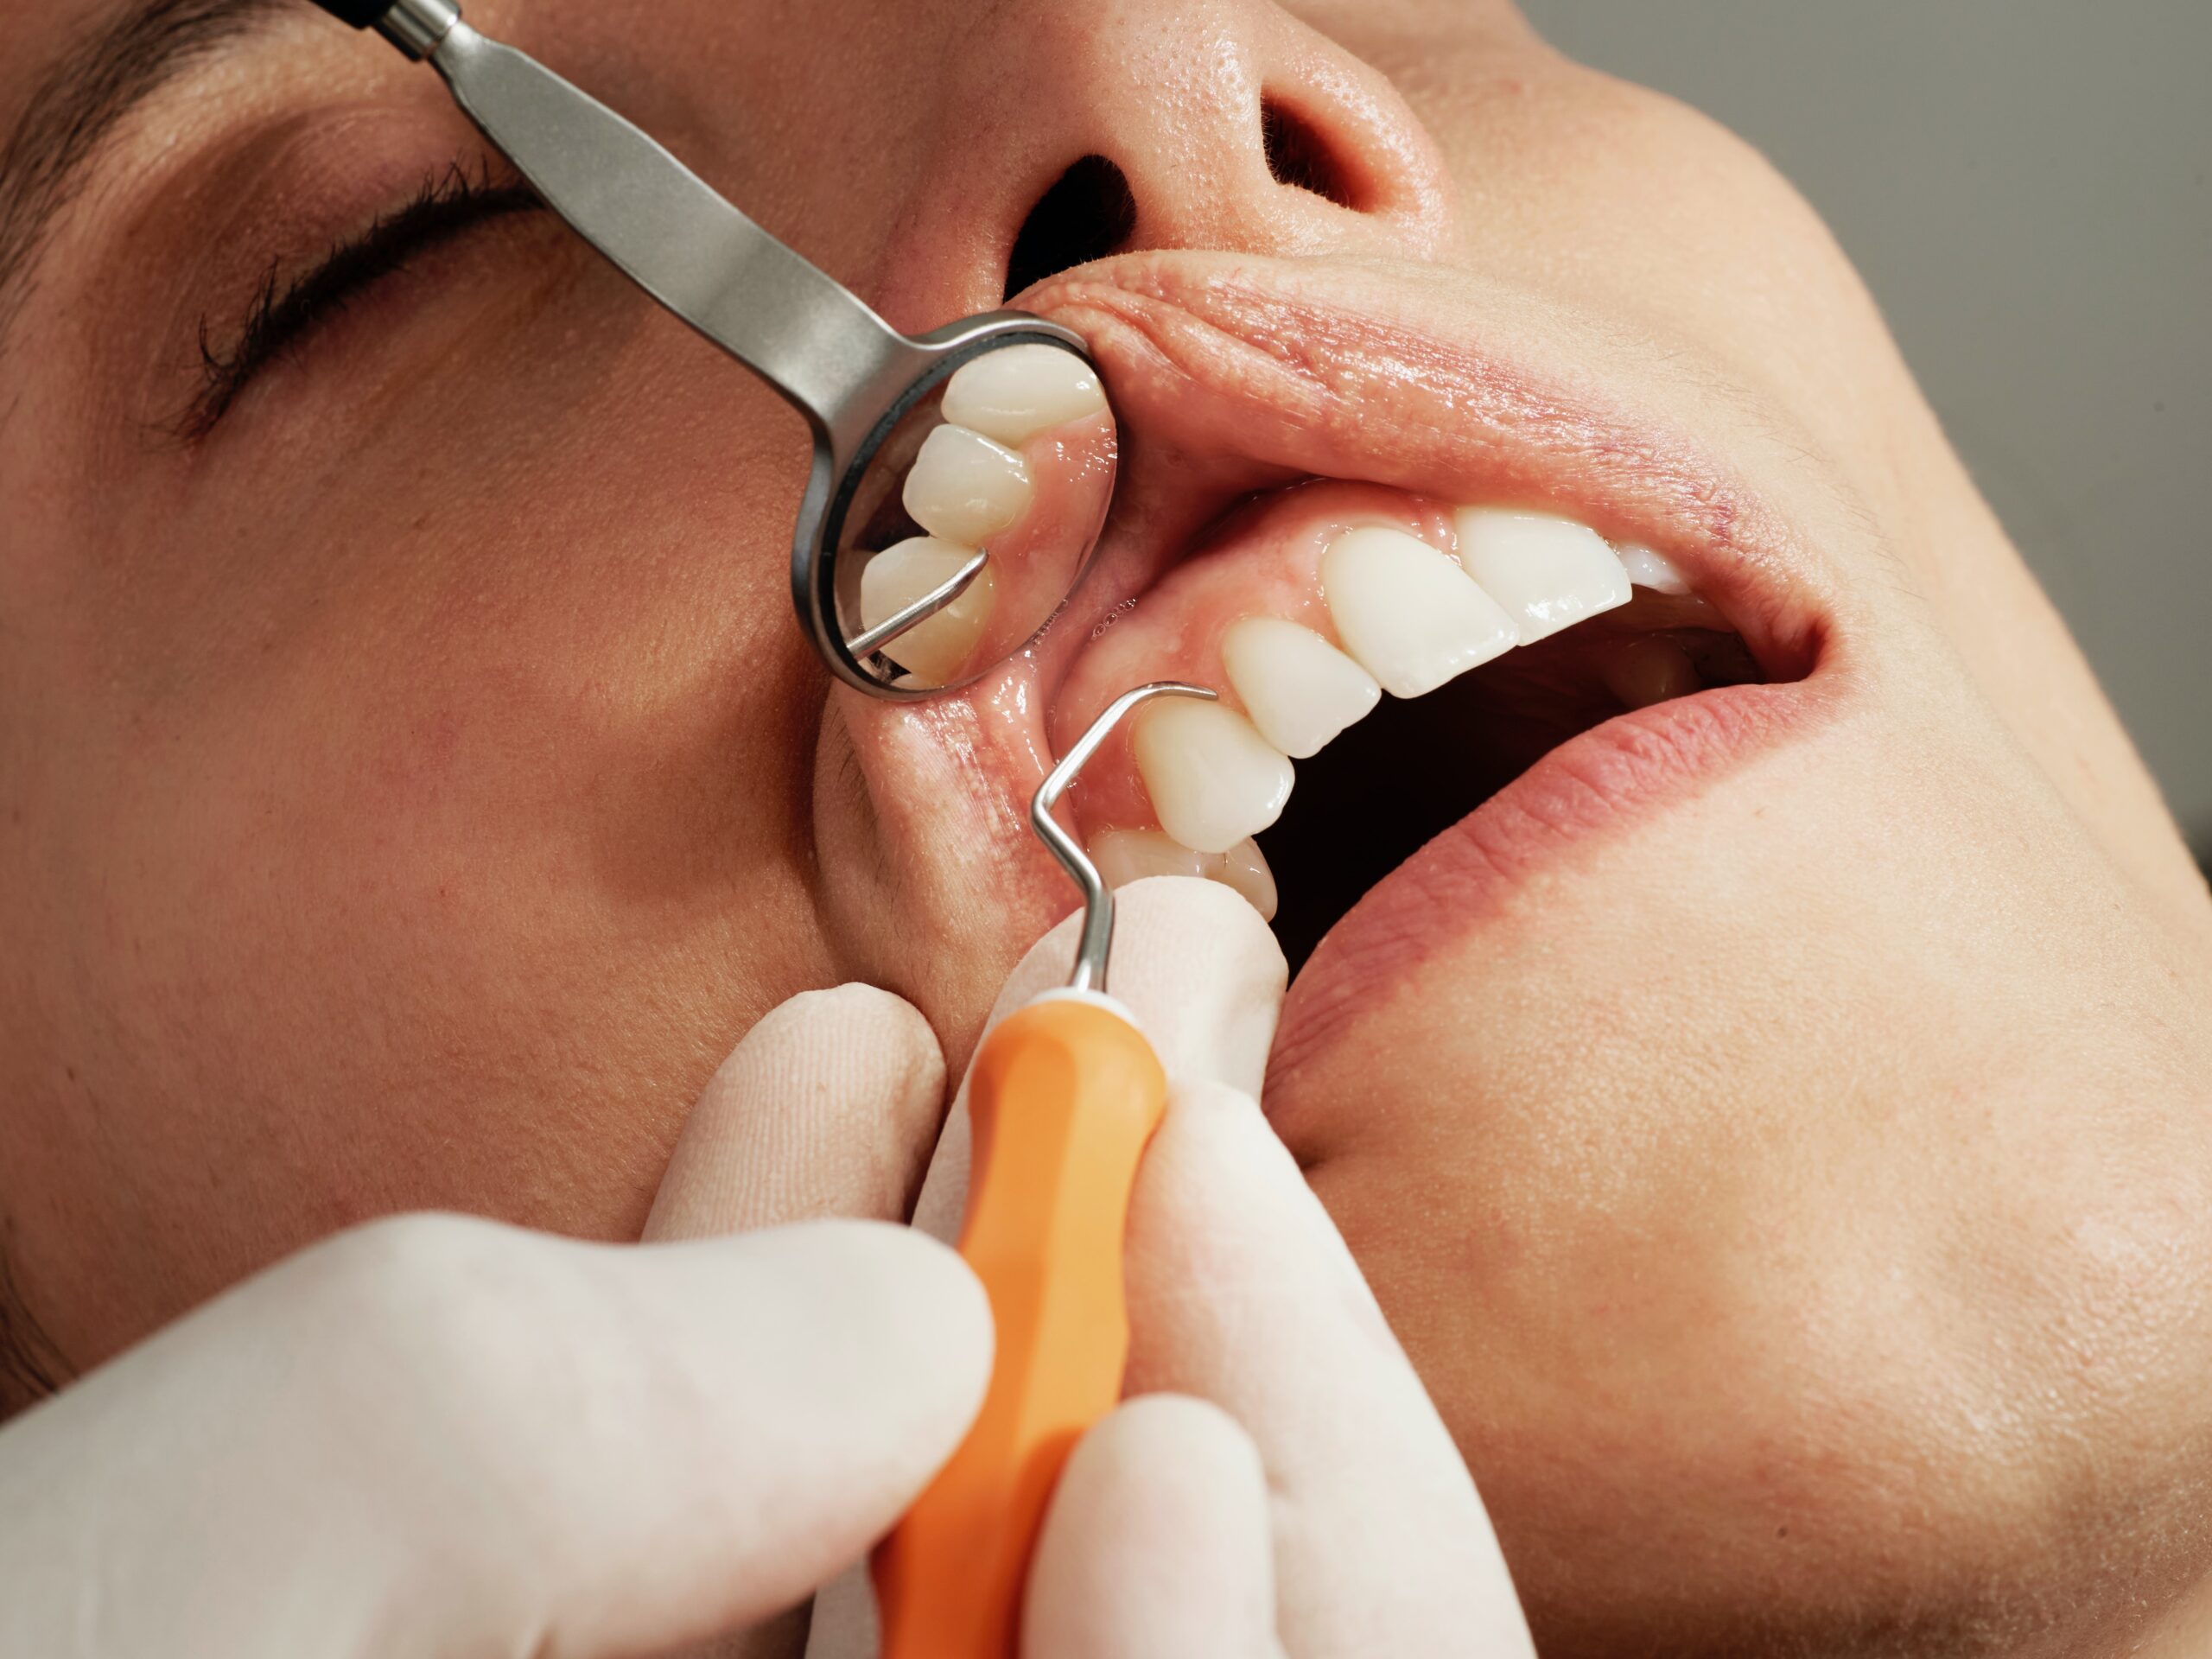 Wellness-Dentist-Scaling-Prophylaxis-Dental-Treatment-Probing-Dental-Human-Face-Teeth-Mouth-Lip